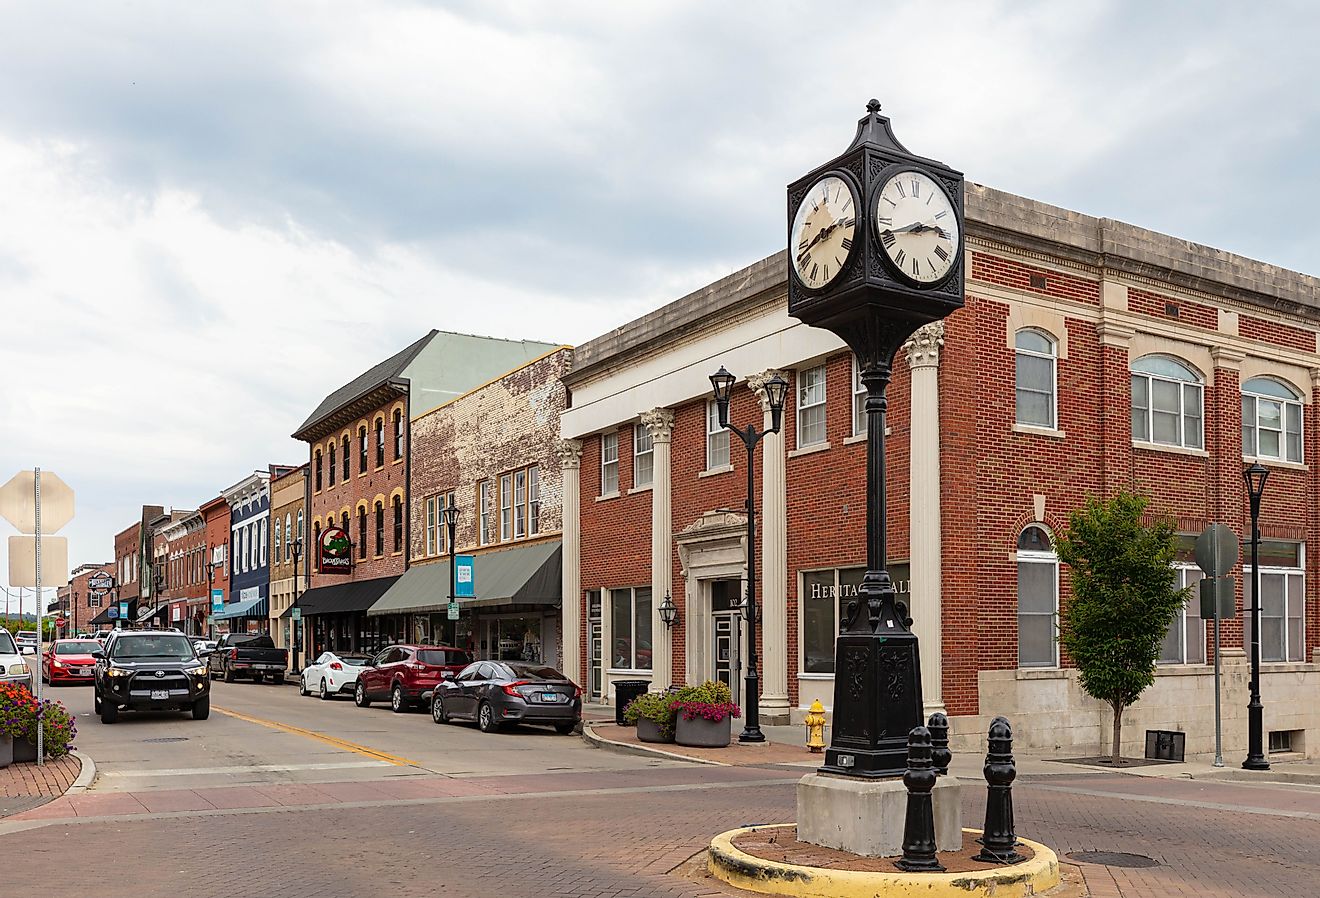 The Old Historic buildings at Main Street, Cape Girardeau, Missouri. Image credit Roberto Galan via Shutterstock